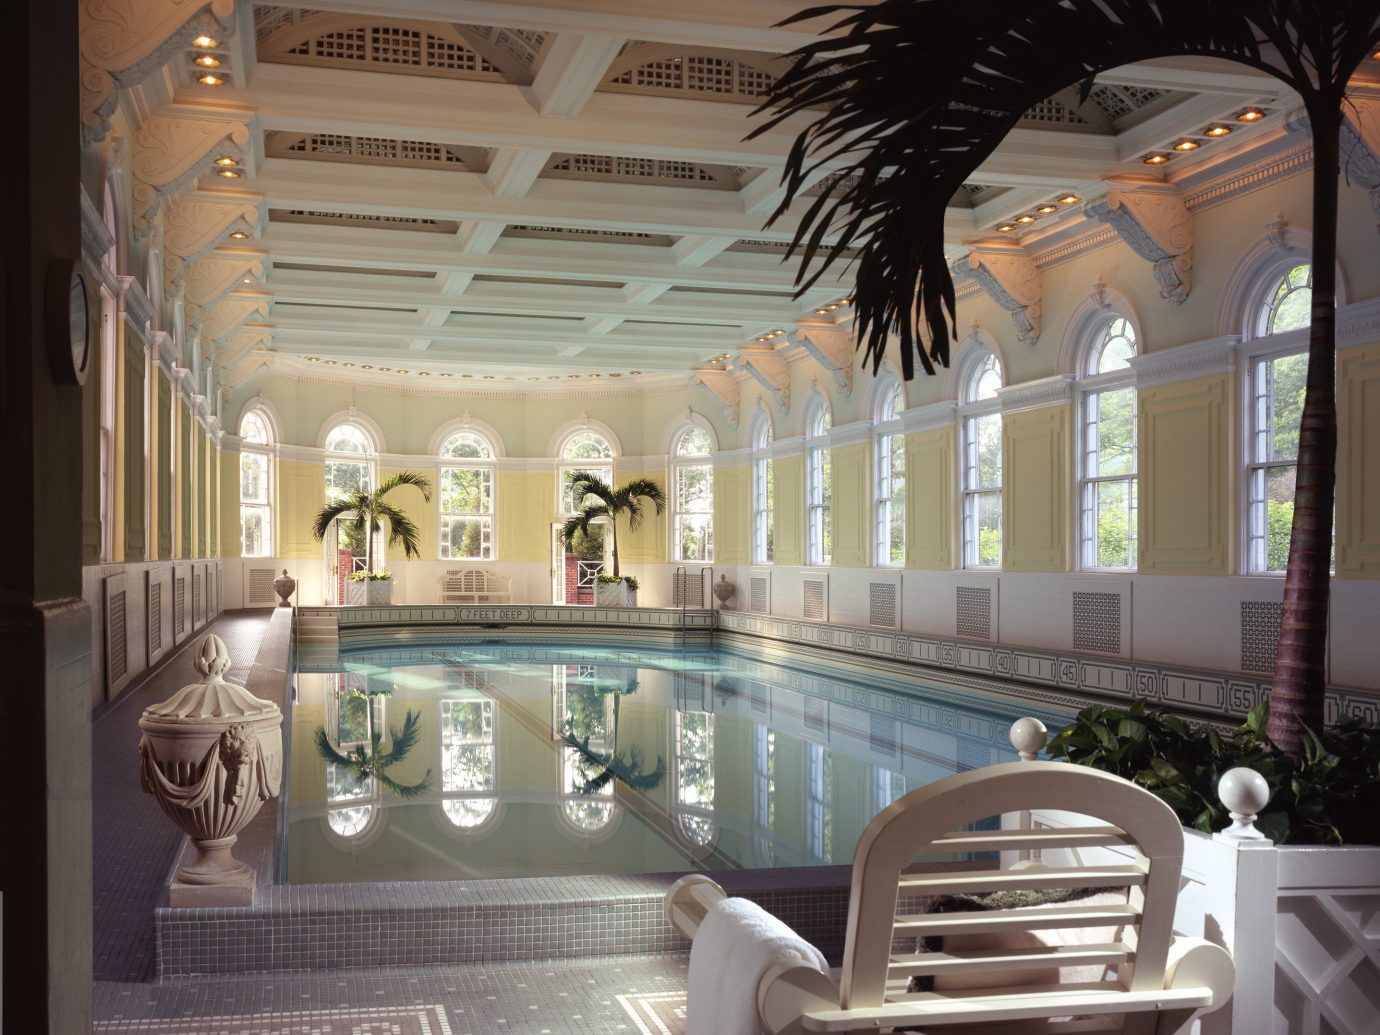 Romance Trip Ideas Weekend Getaways swimming pool interior design estate Lobby ceiling hotel condominium amenity furniture